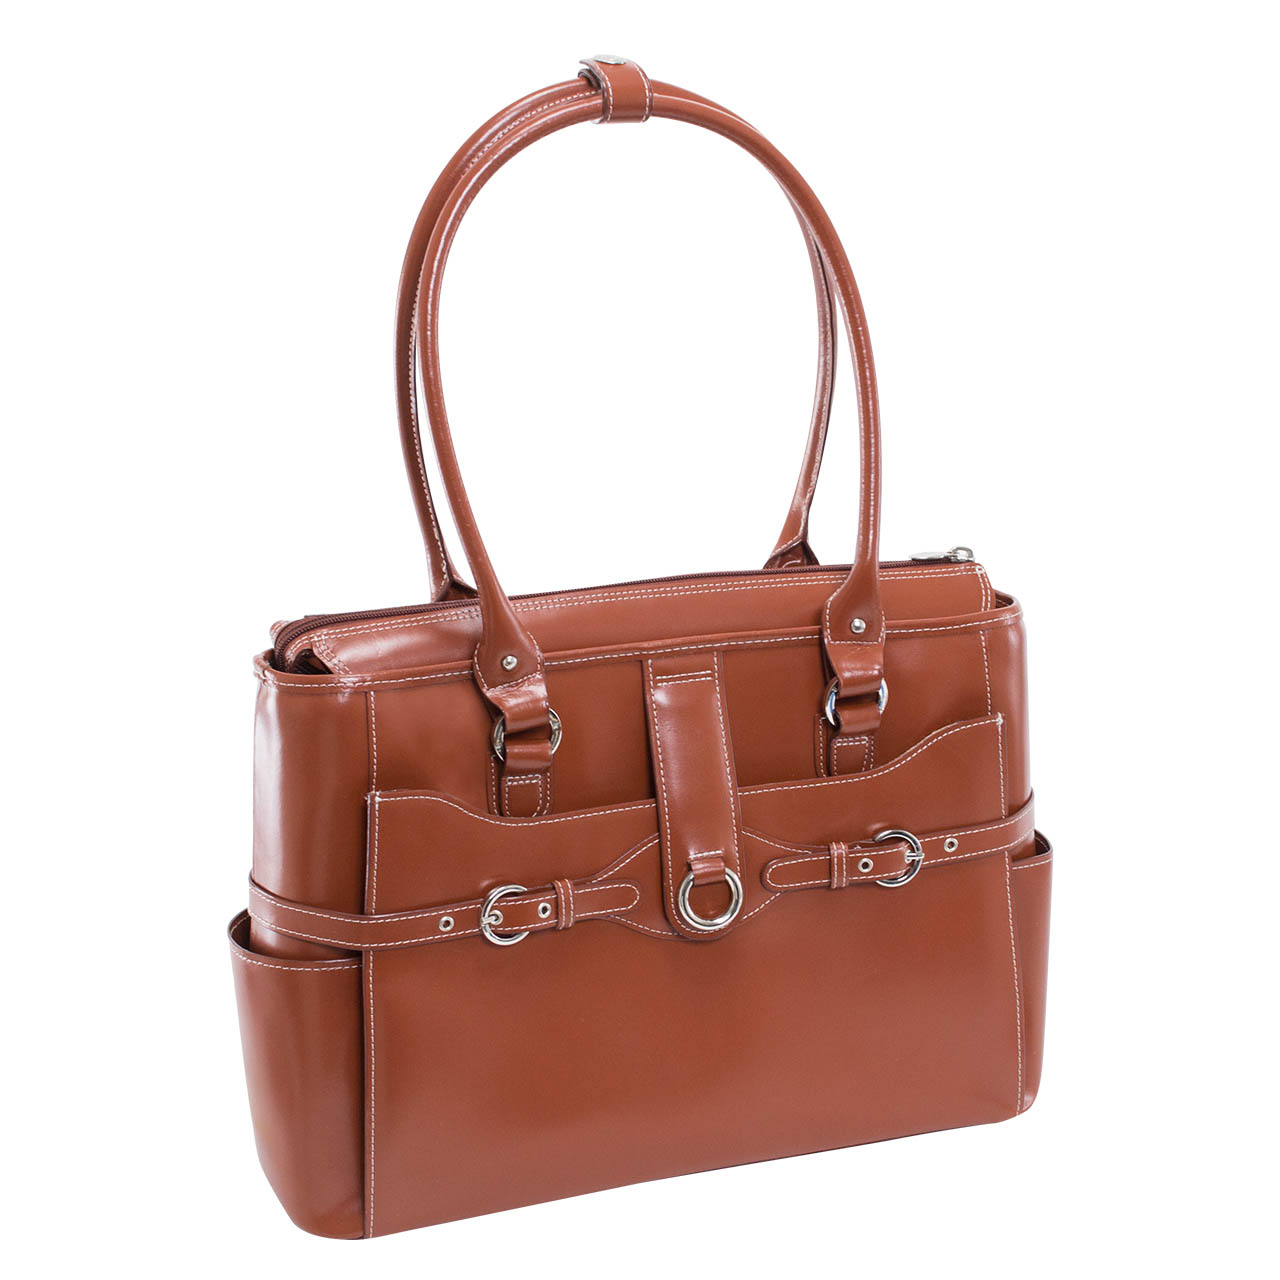 Franklin Covey Leather Briefcase Laptop Bag- Excellent!